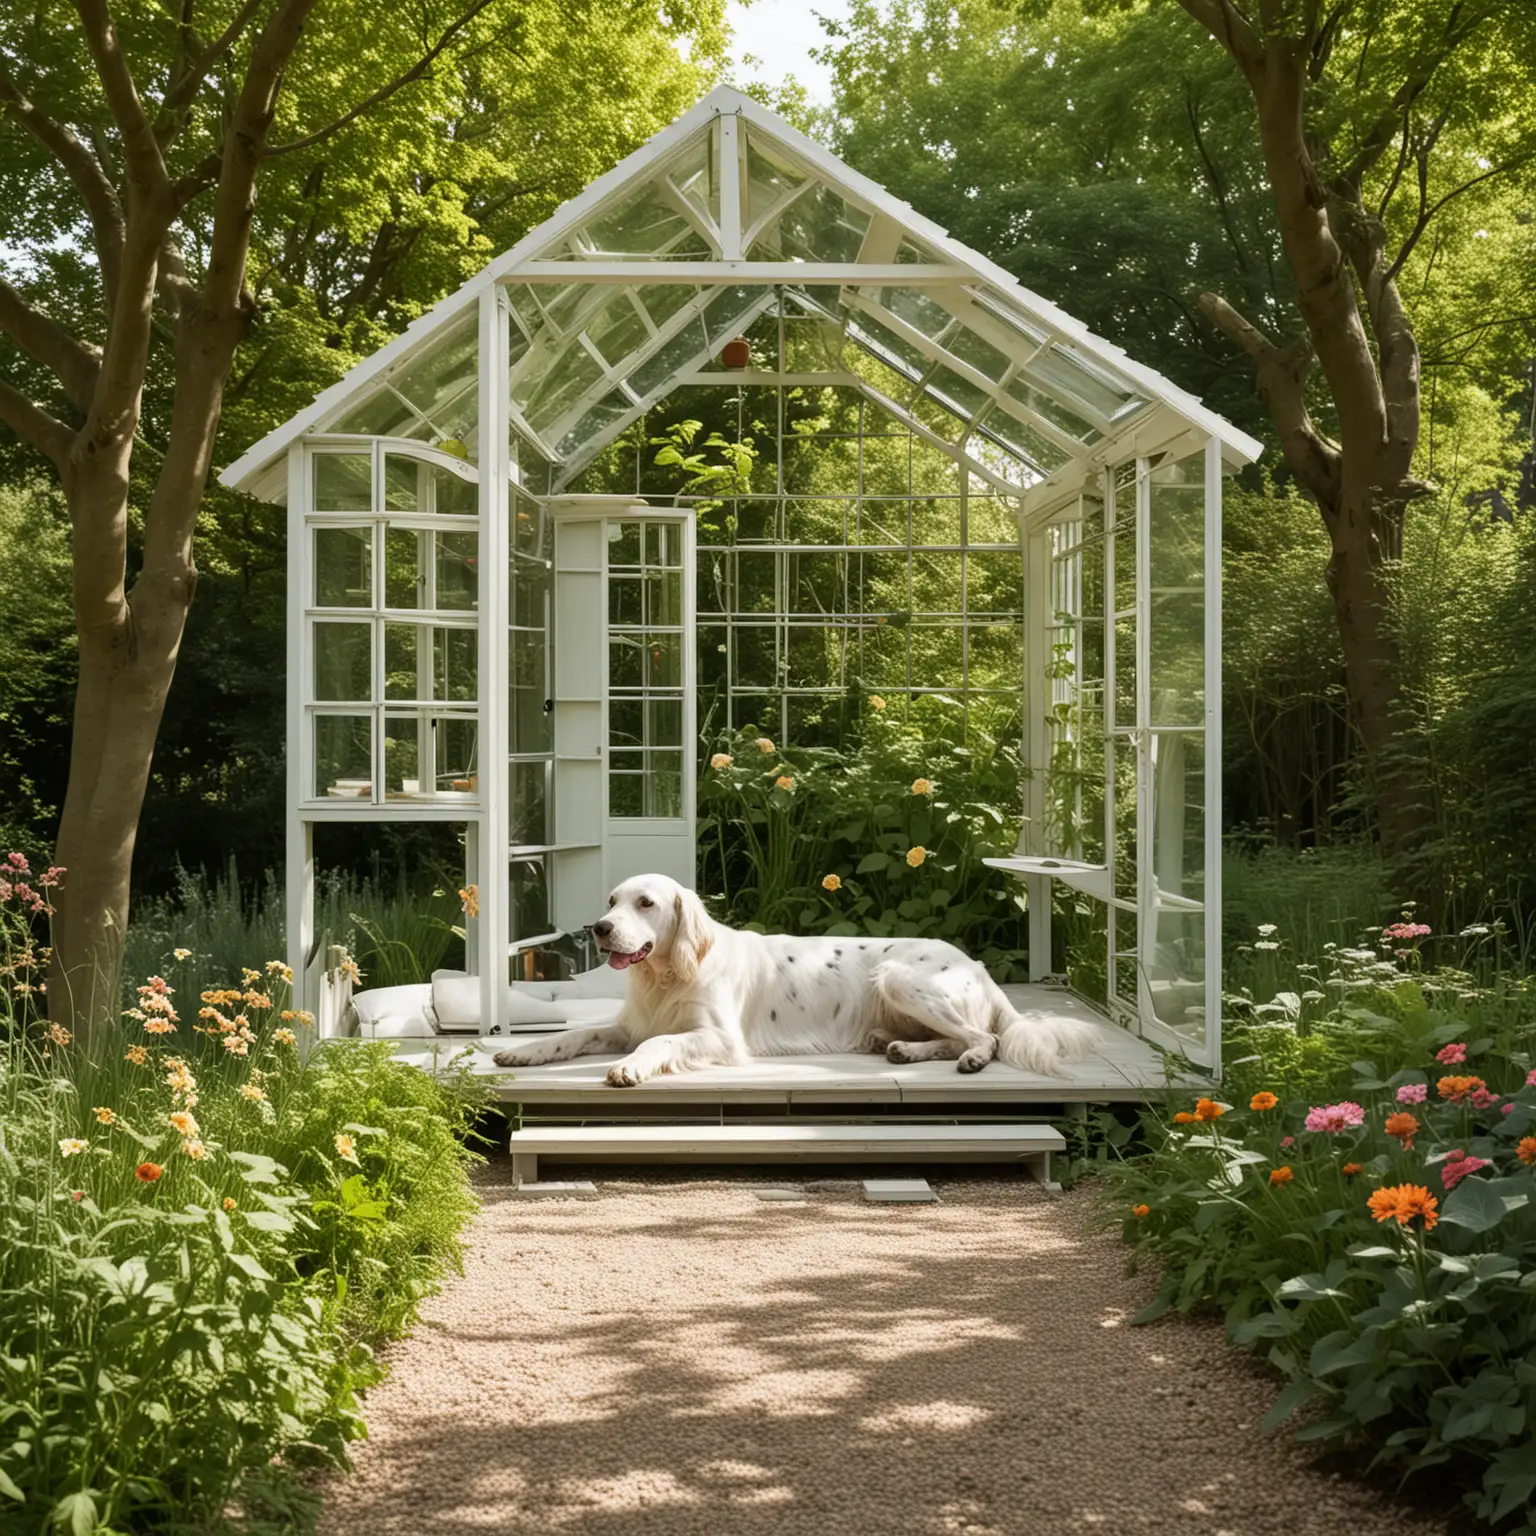 Imagine a tiny garden folly in de style of MVRDV architect. It's a sunny day. An English Setter lays in the sun.